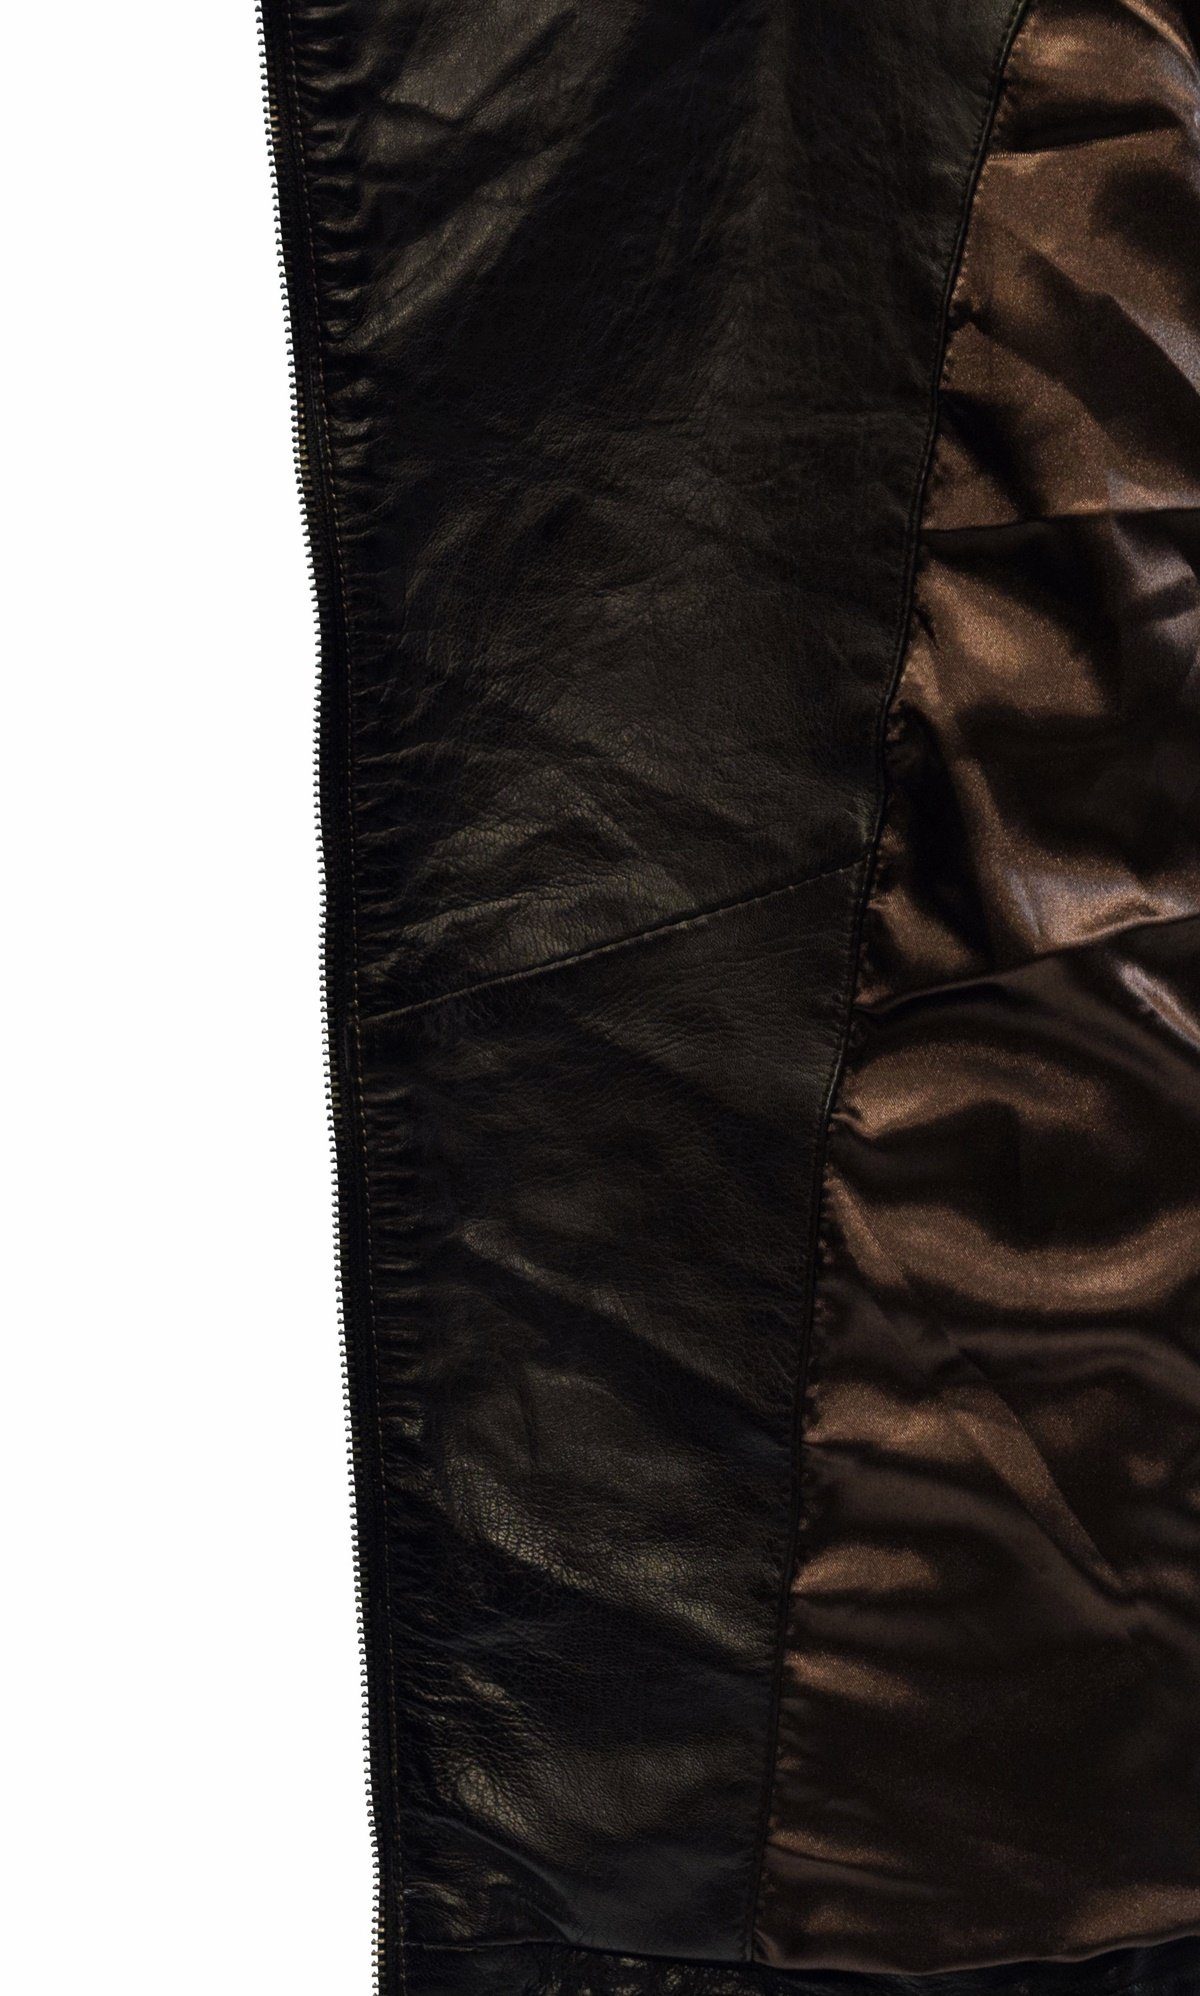 Stepp-Lederjacke Tiefbraun weichem mit aus Zimmert Braun Schwarz, Leder Kapuze Leather Lederjacke Elda